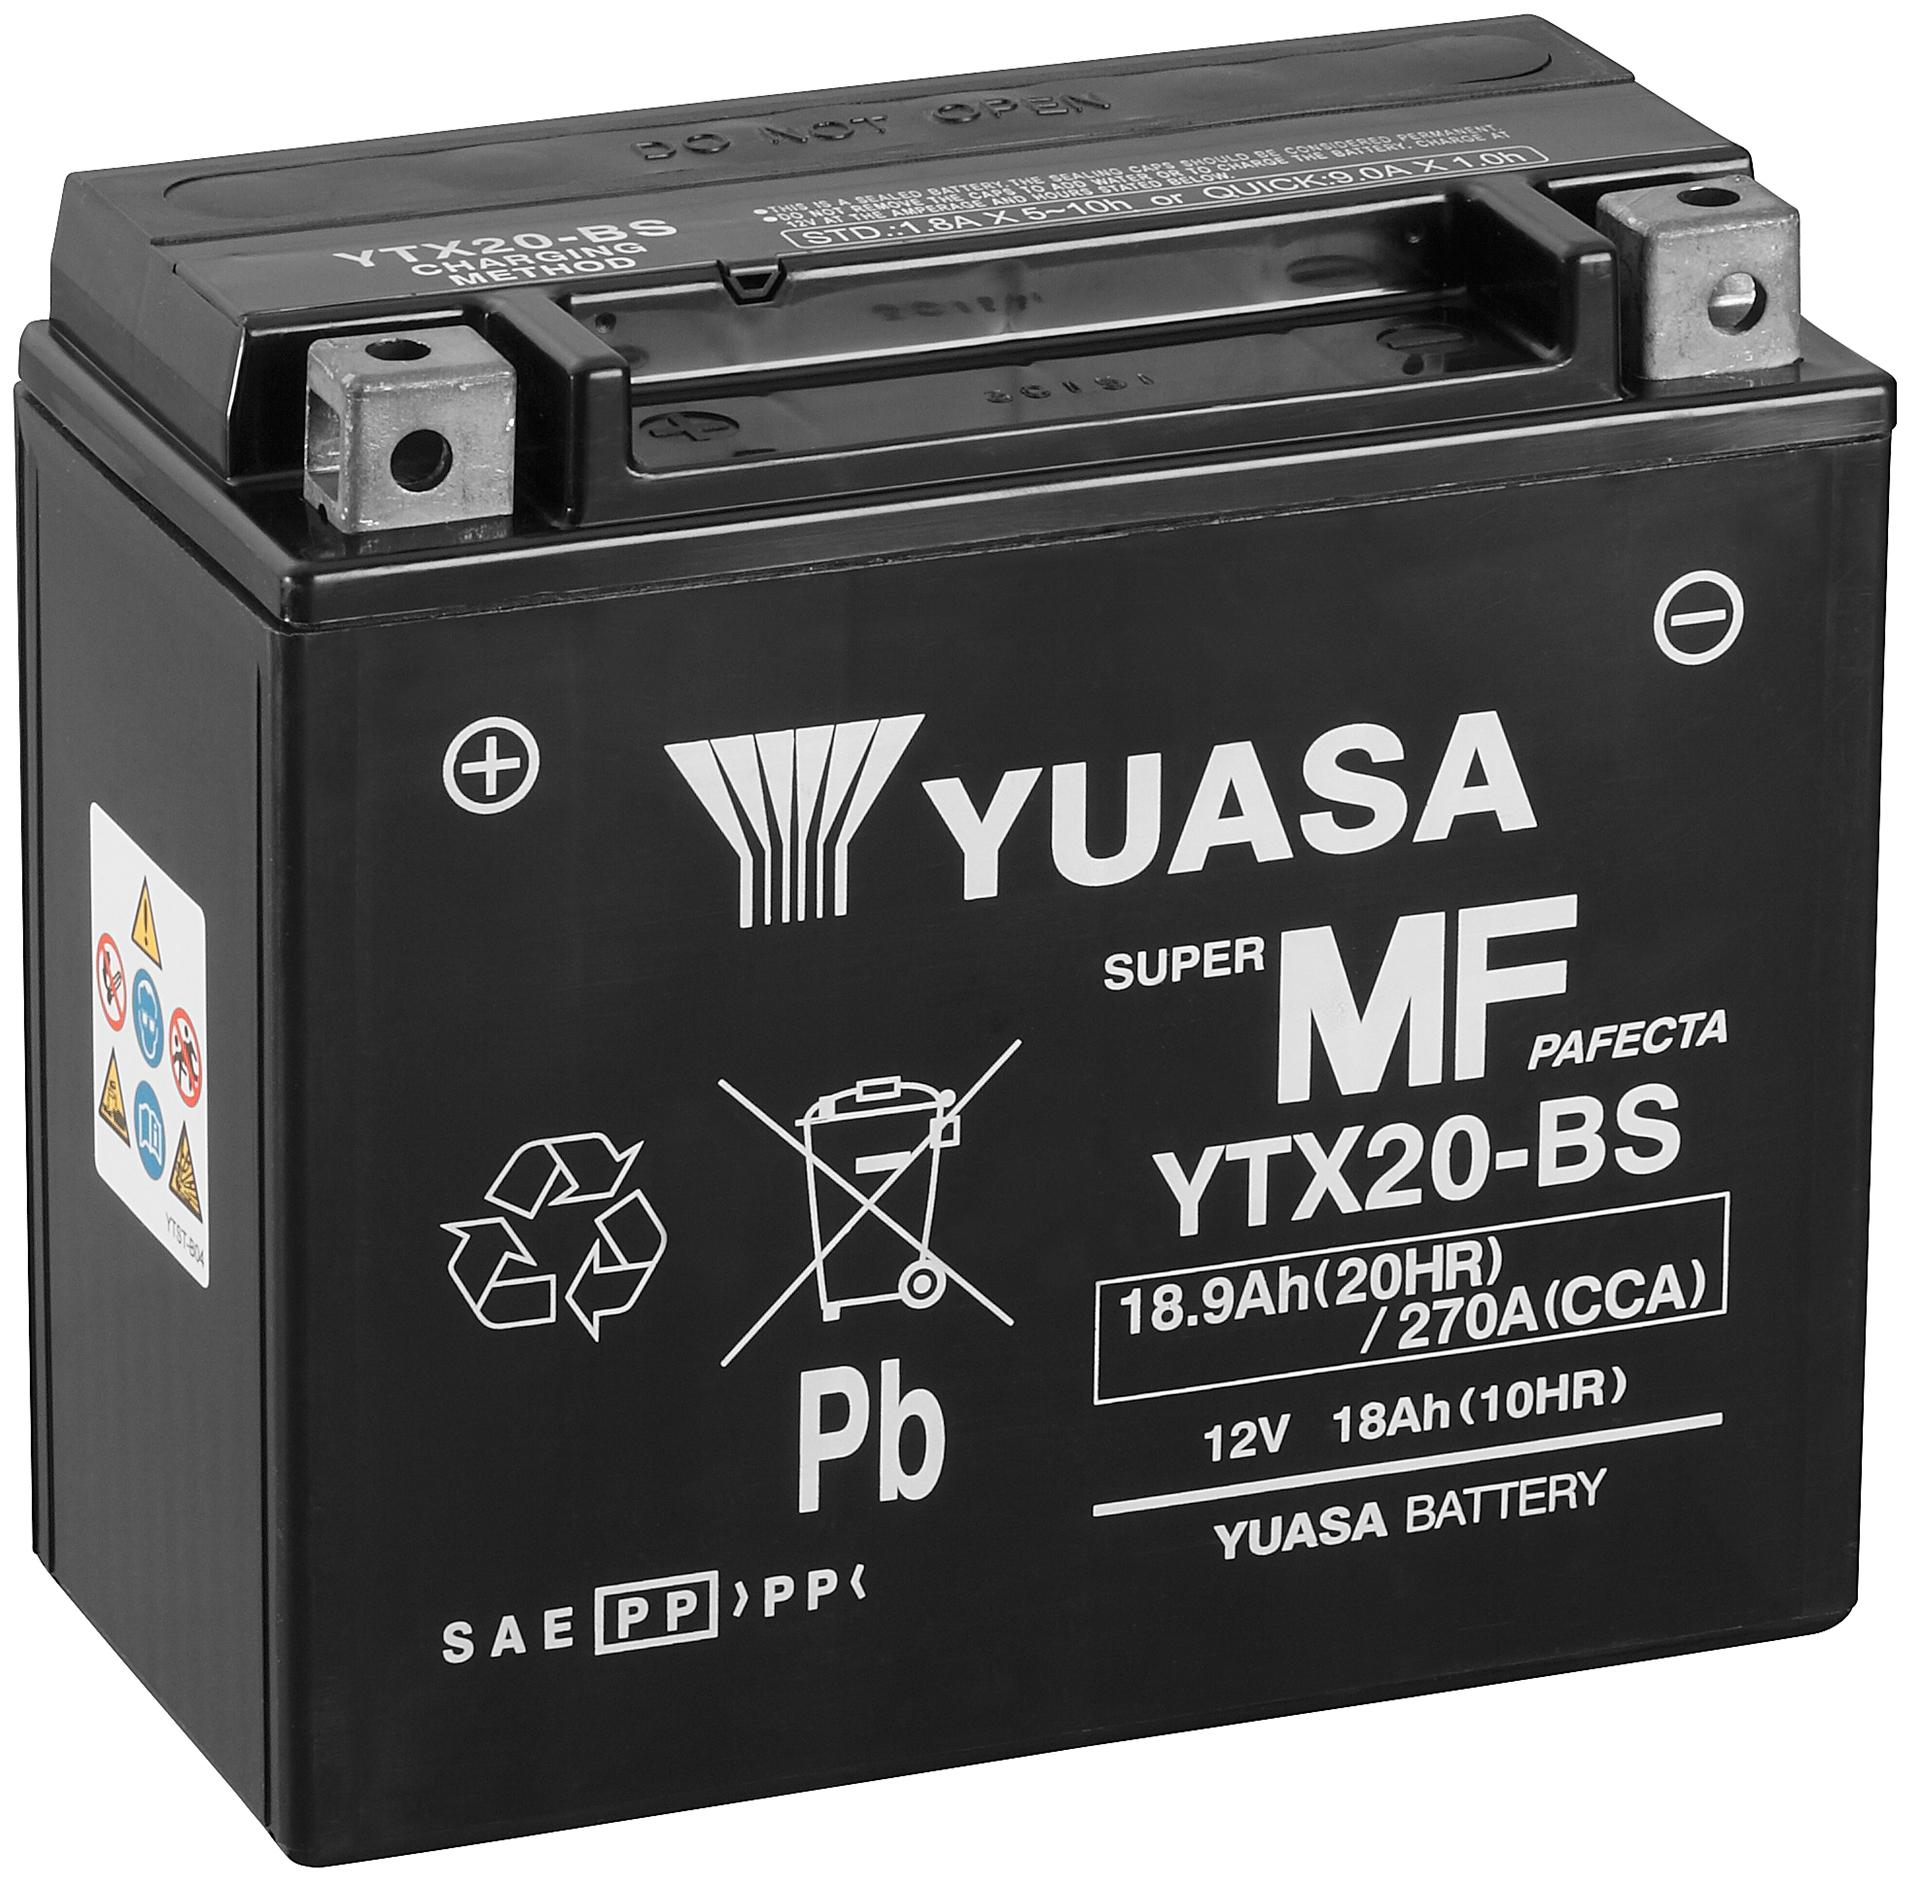 Yuasa Ytx20-Bs 12V Maintenance Free Vrla Battery